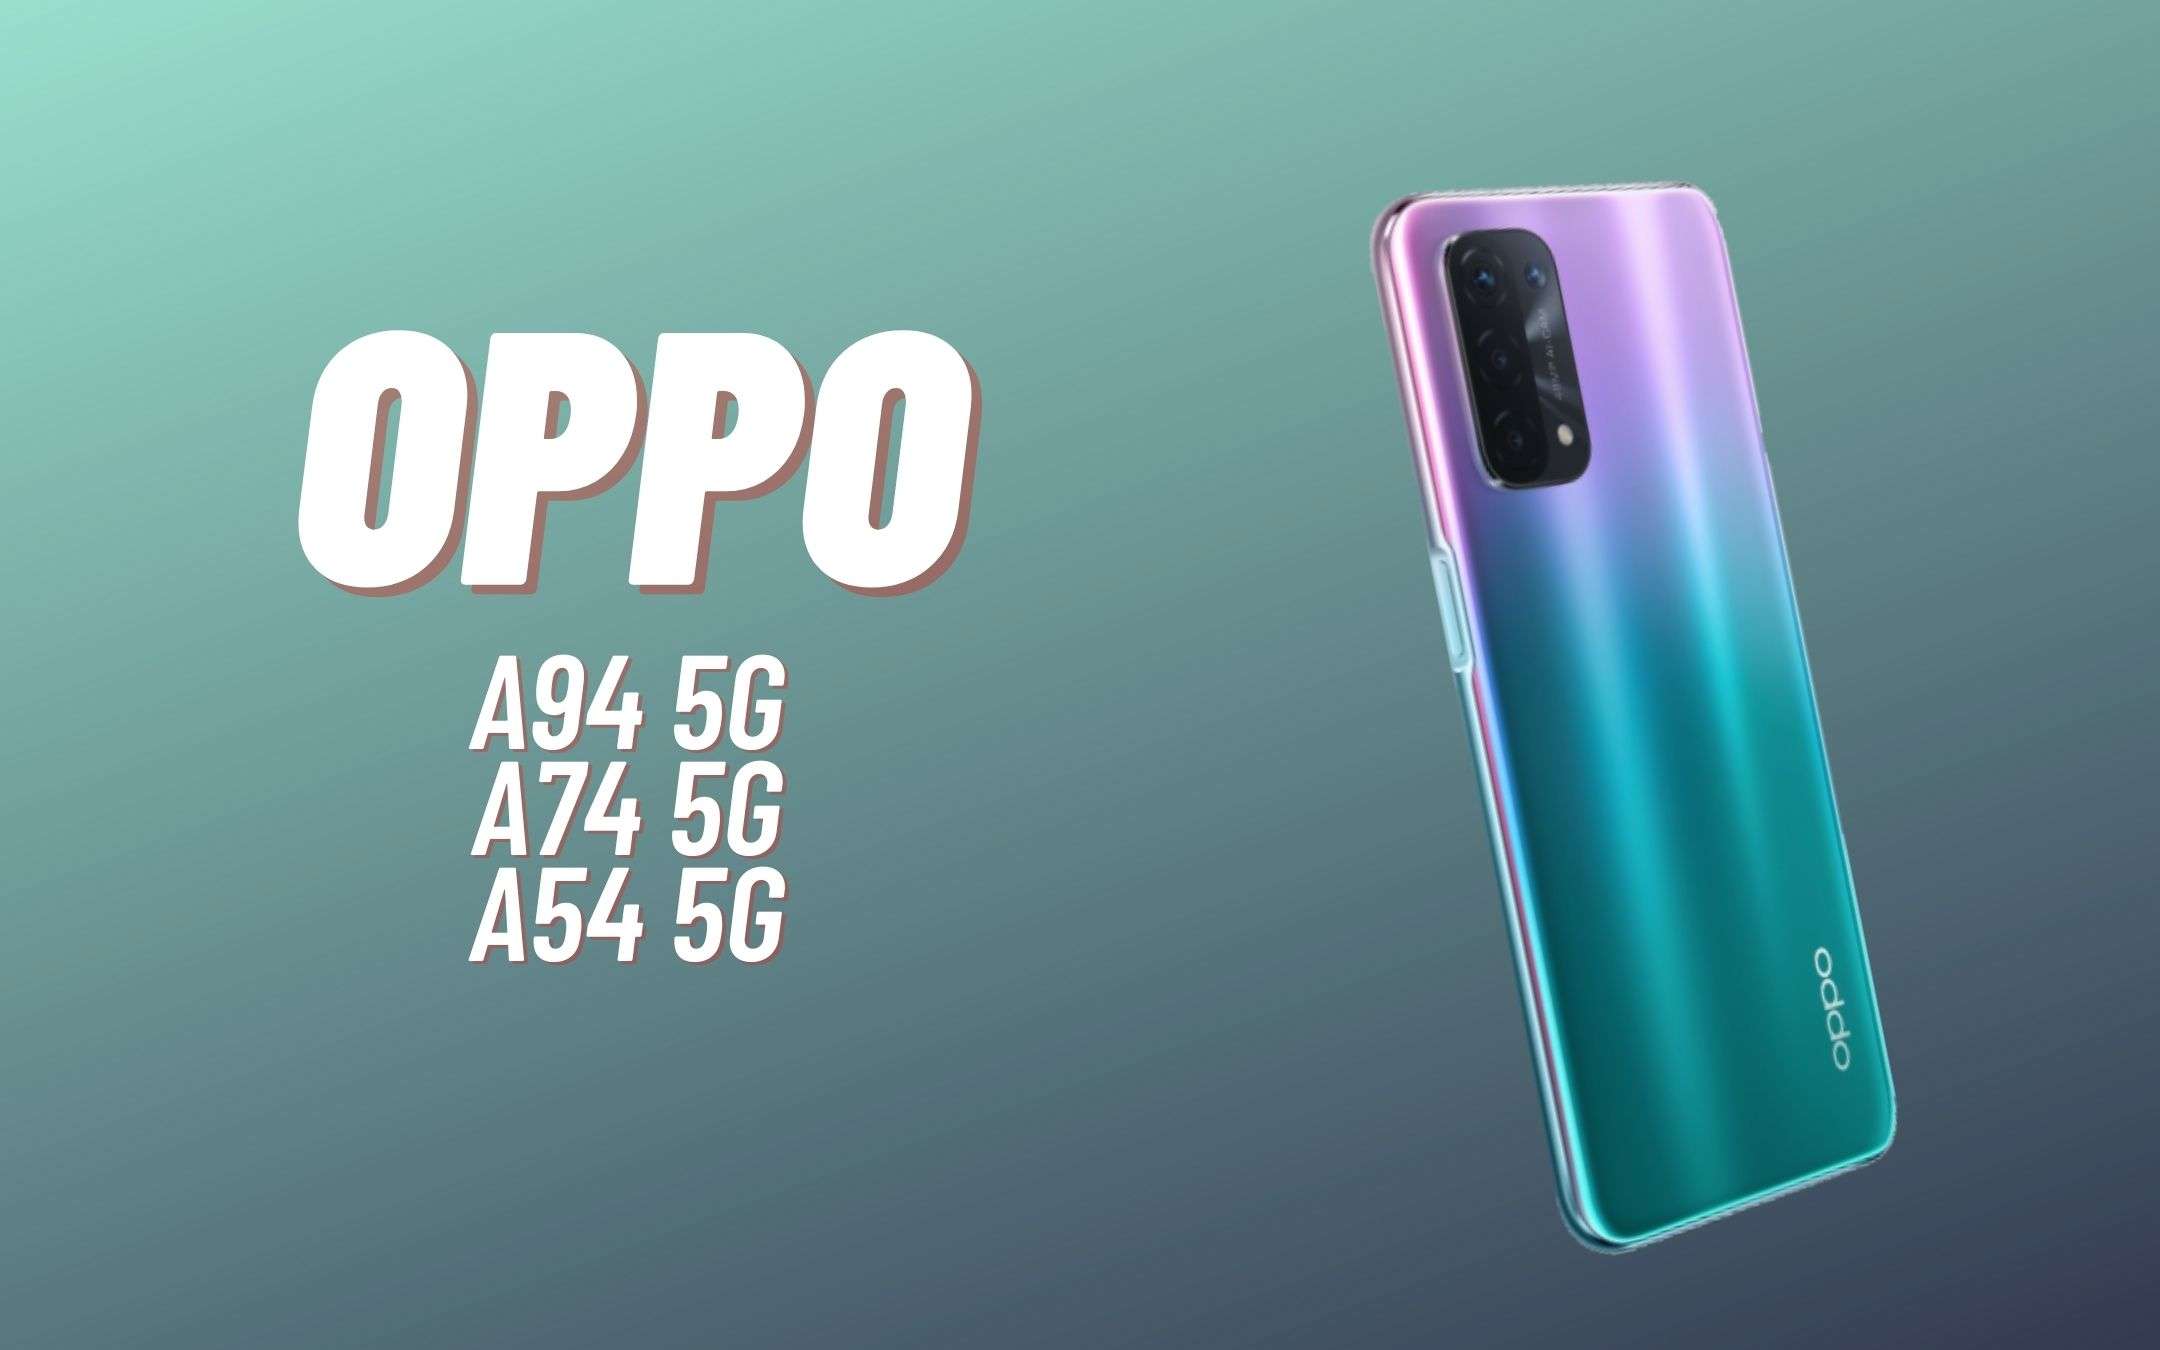 OPPO annuncia A94 5G, A74 5G e A54 5G in Italia